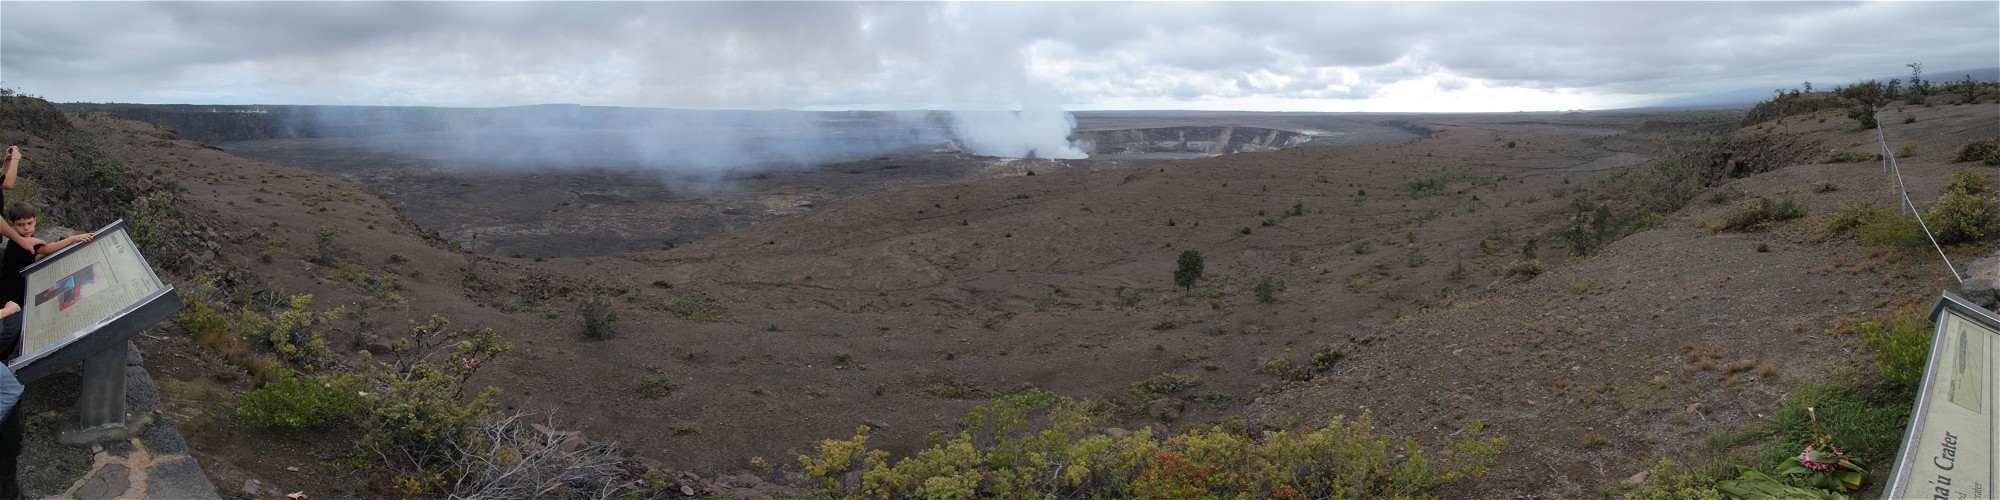 Kilauea Crater and Halemaumau (smoke)